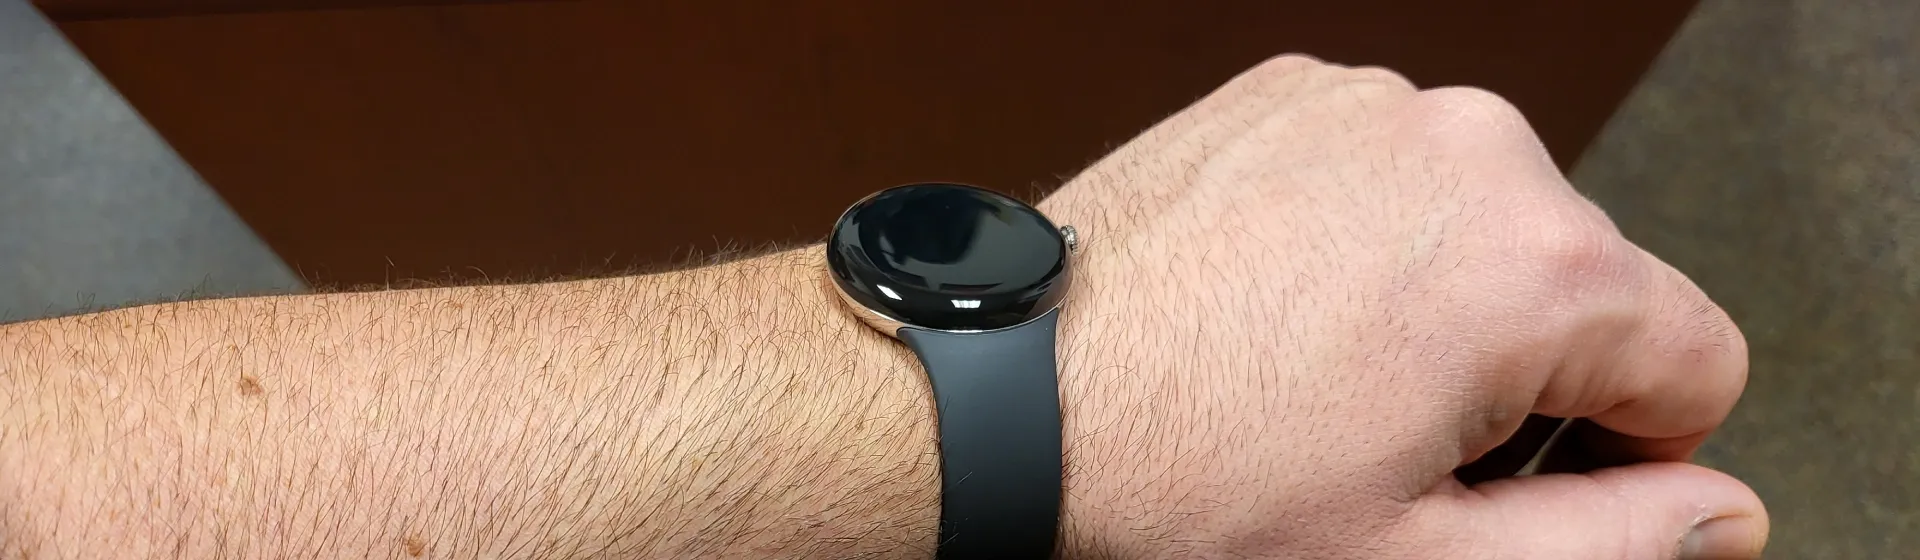 Pixel Watch: tudo que sabemos sobre o smartwatch da Google